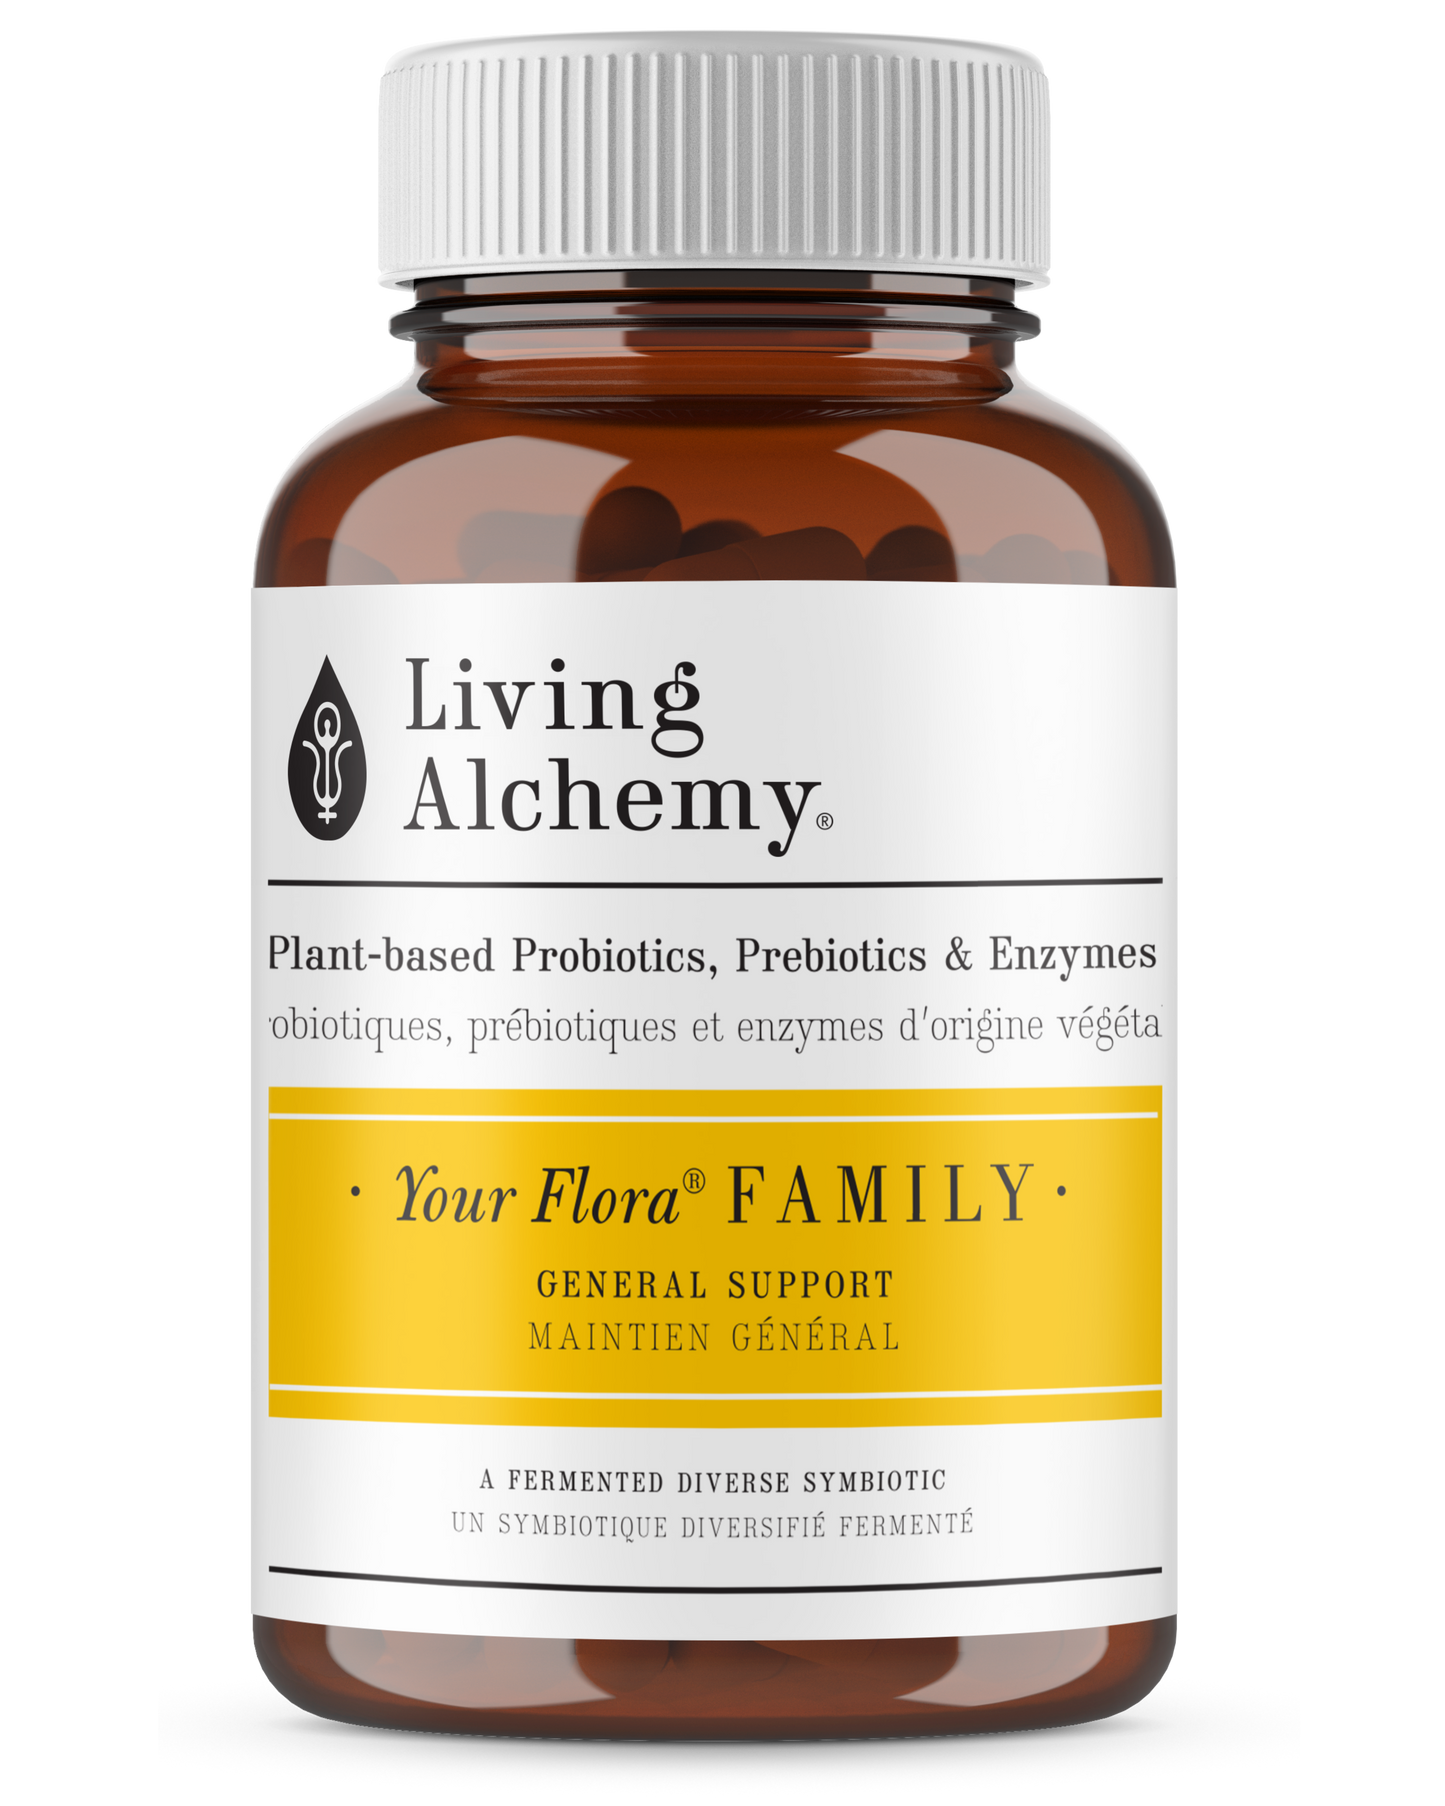 Your Flora® Probiotic Family